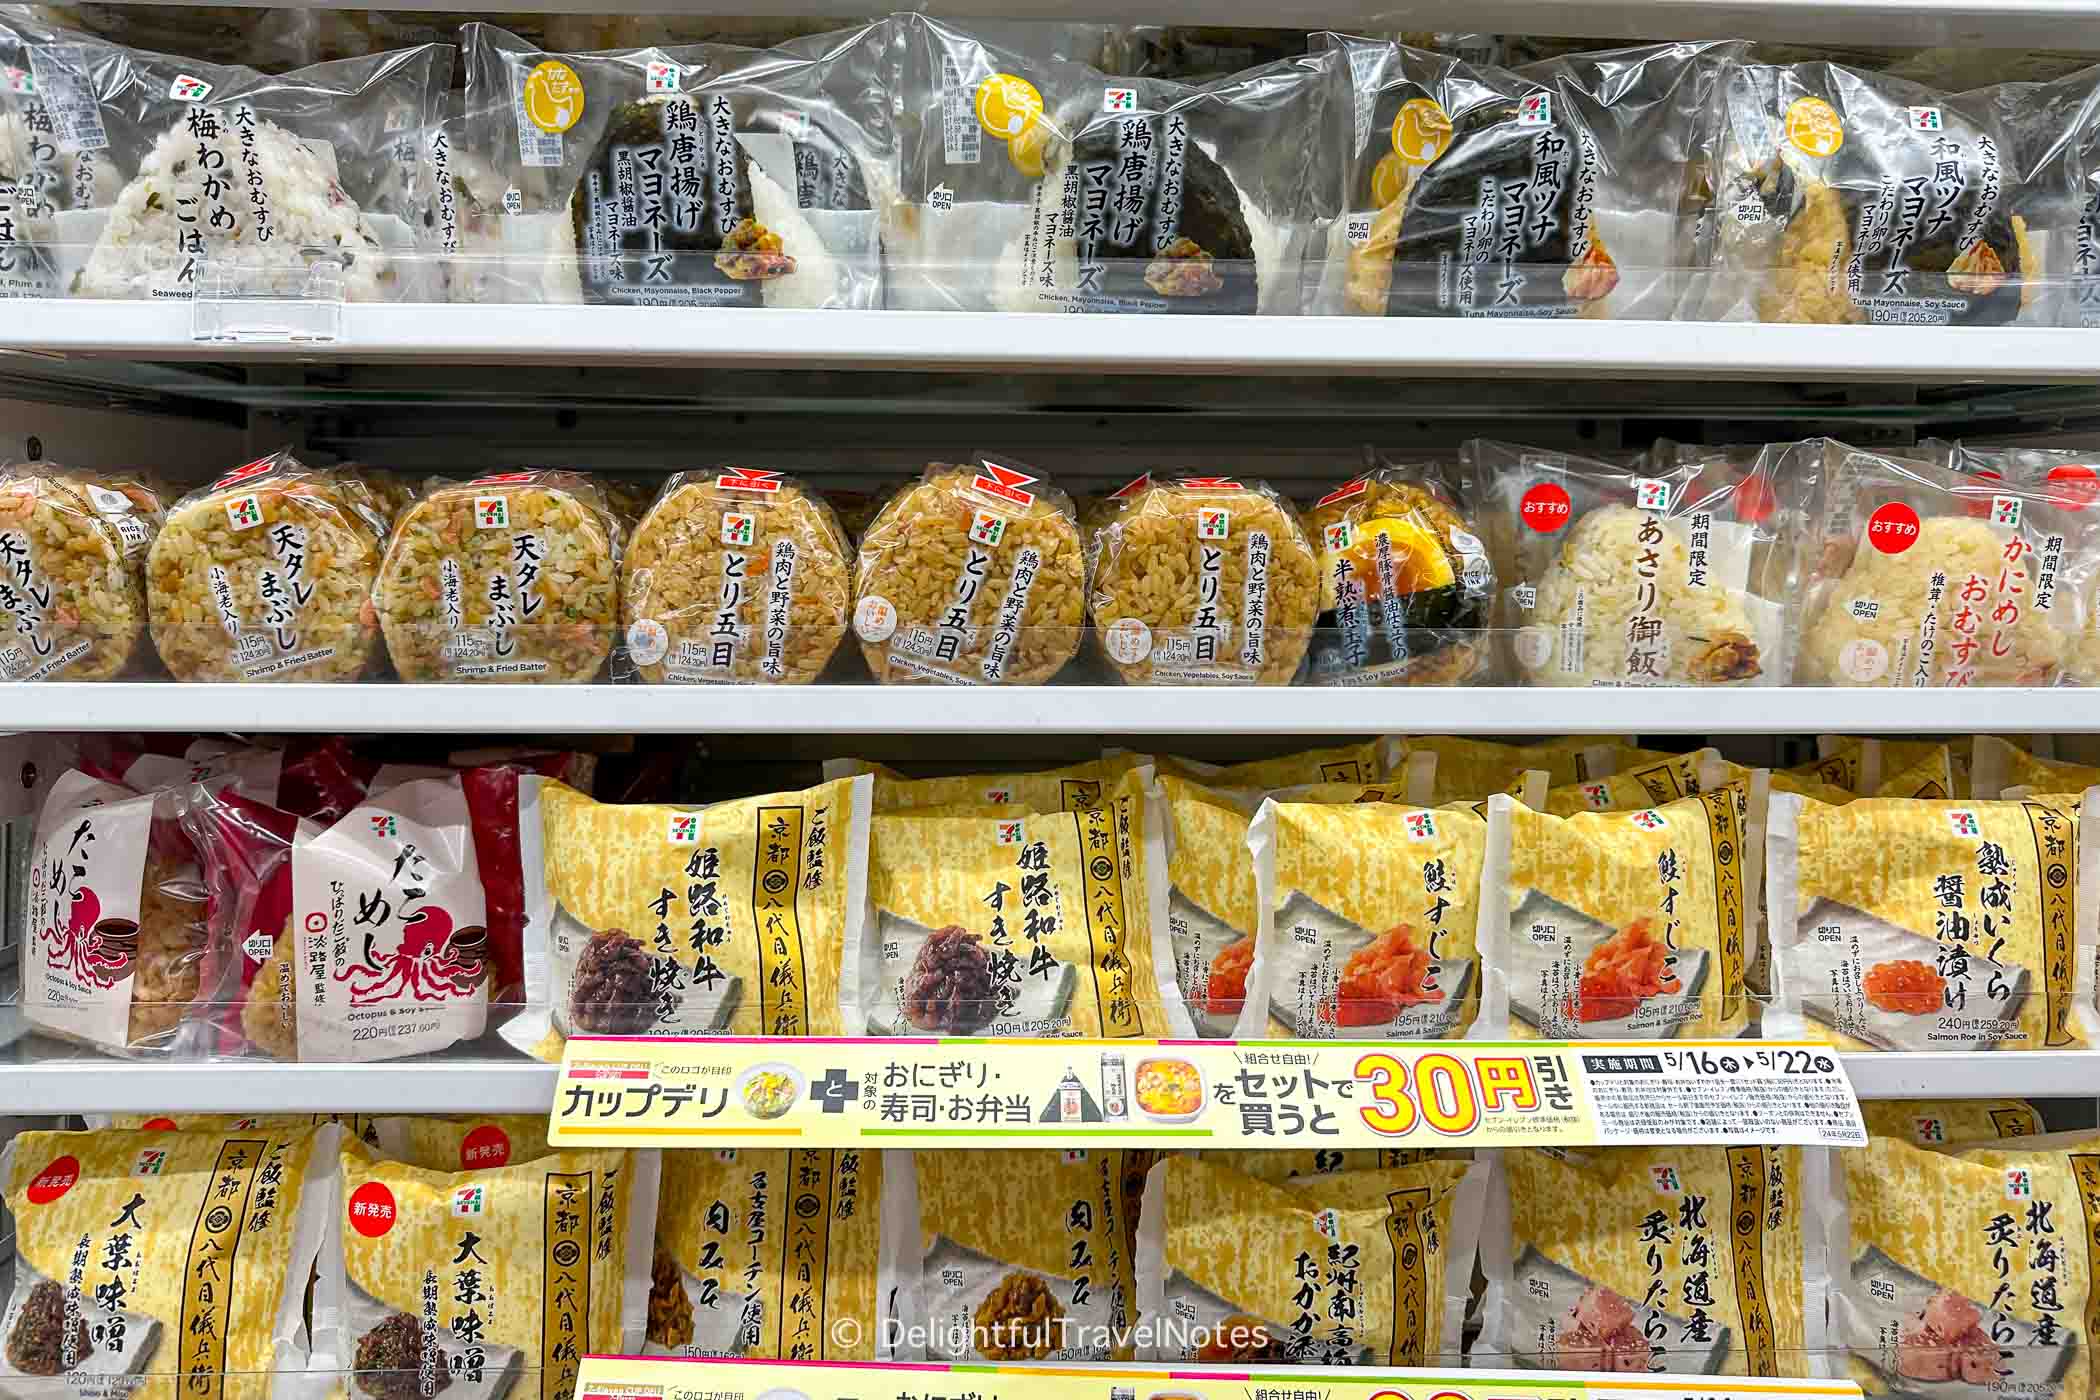 Onigiri sold at 7/11 conbini (convenience stores) in Japan.